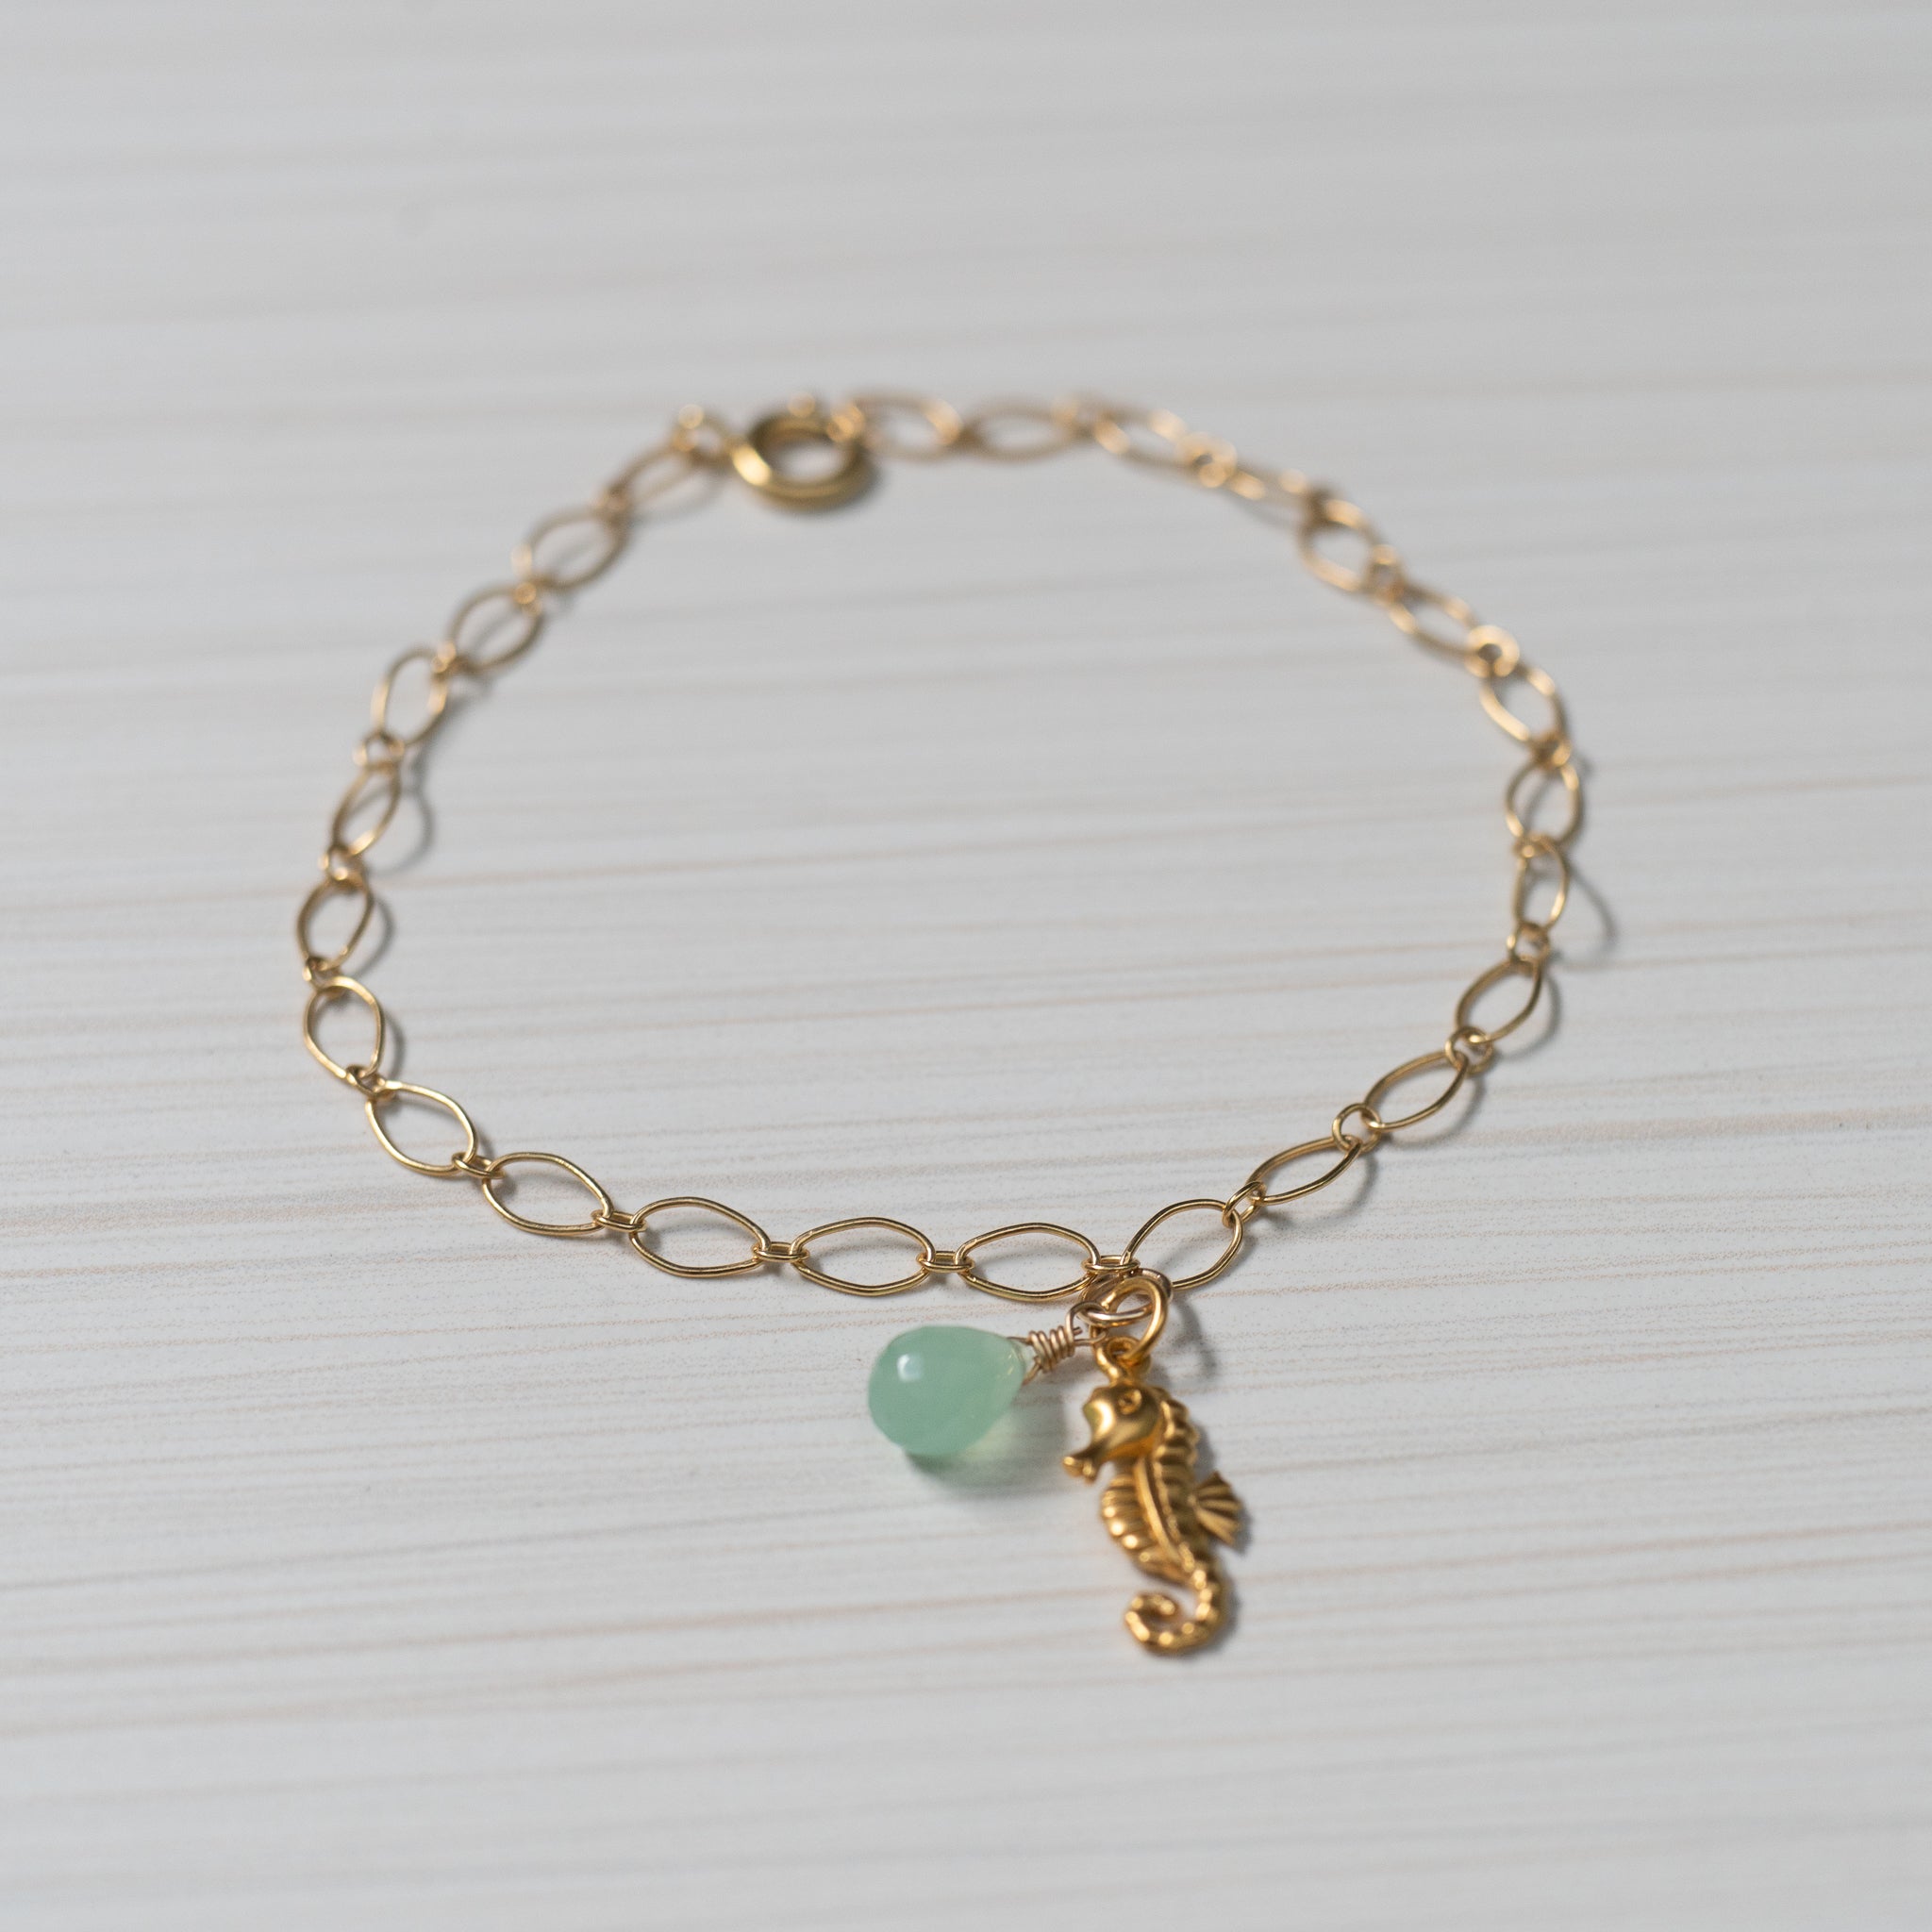 gold seahorse charm bracelet or gold seahorse anklet  Edit alt text